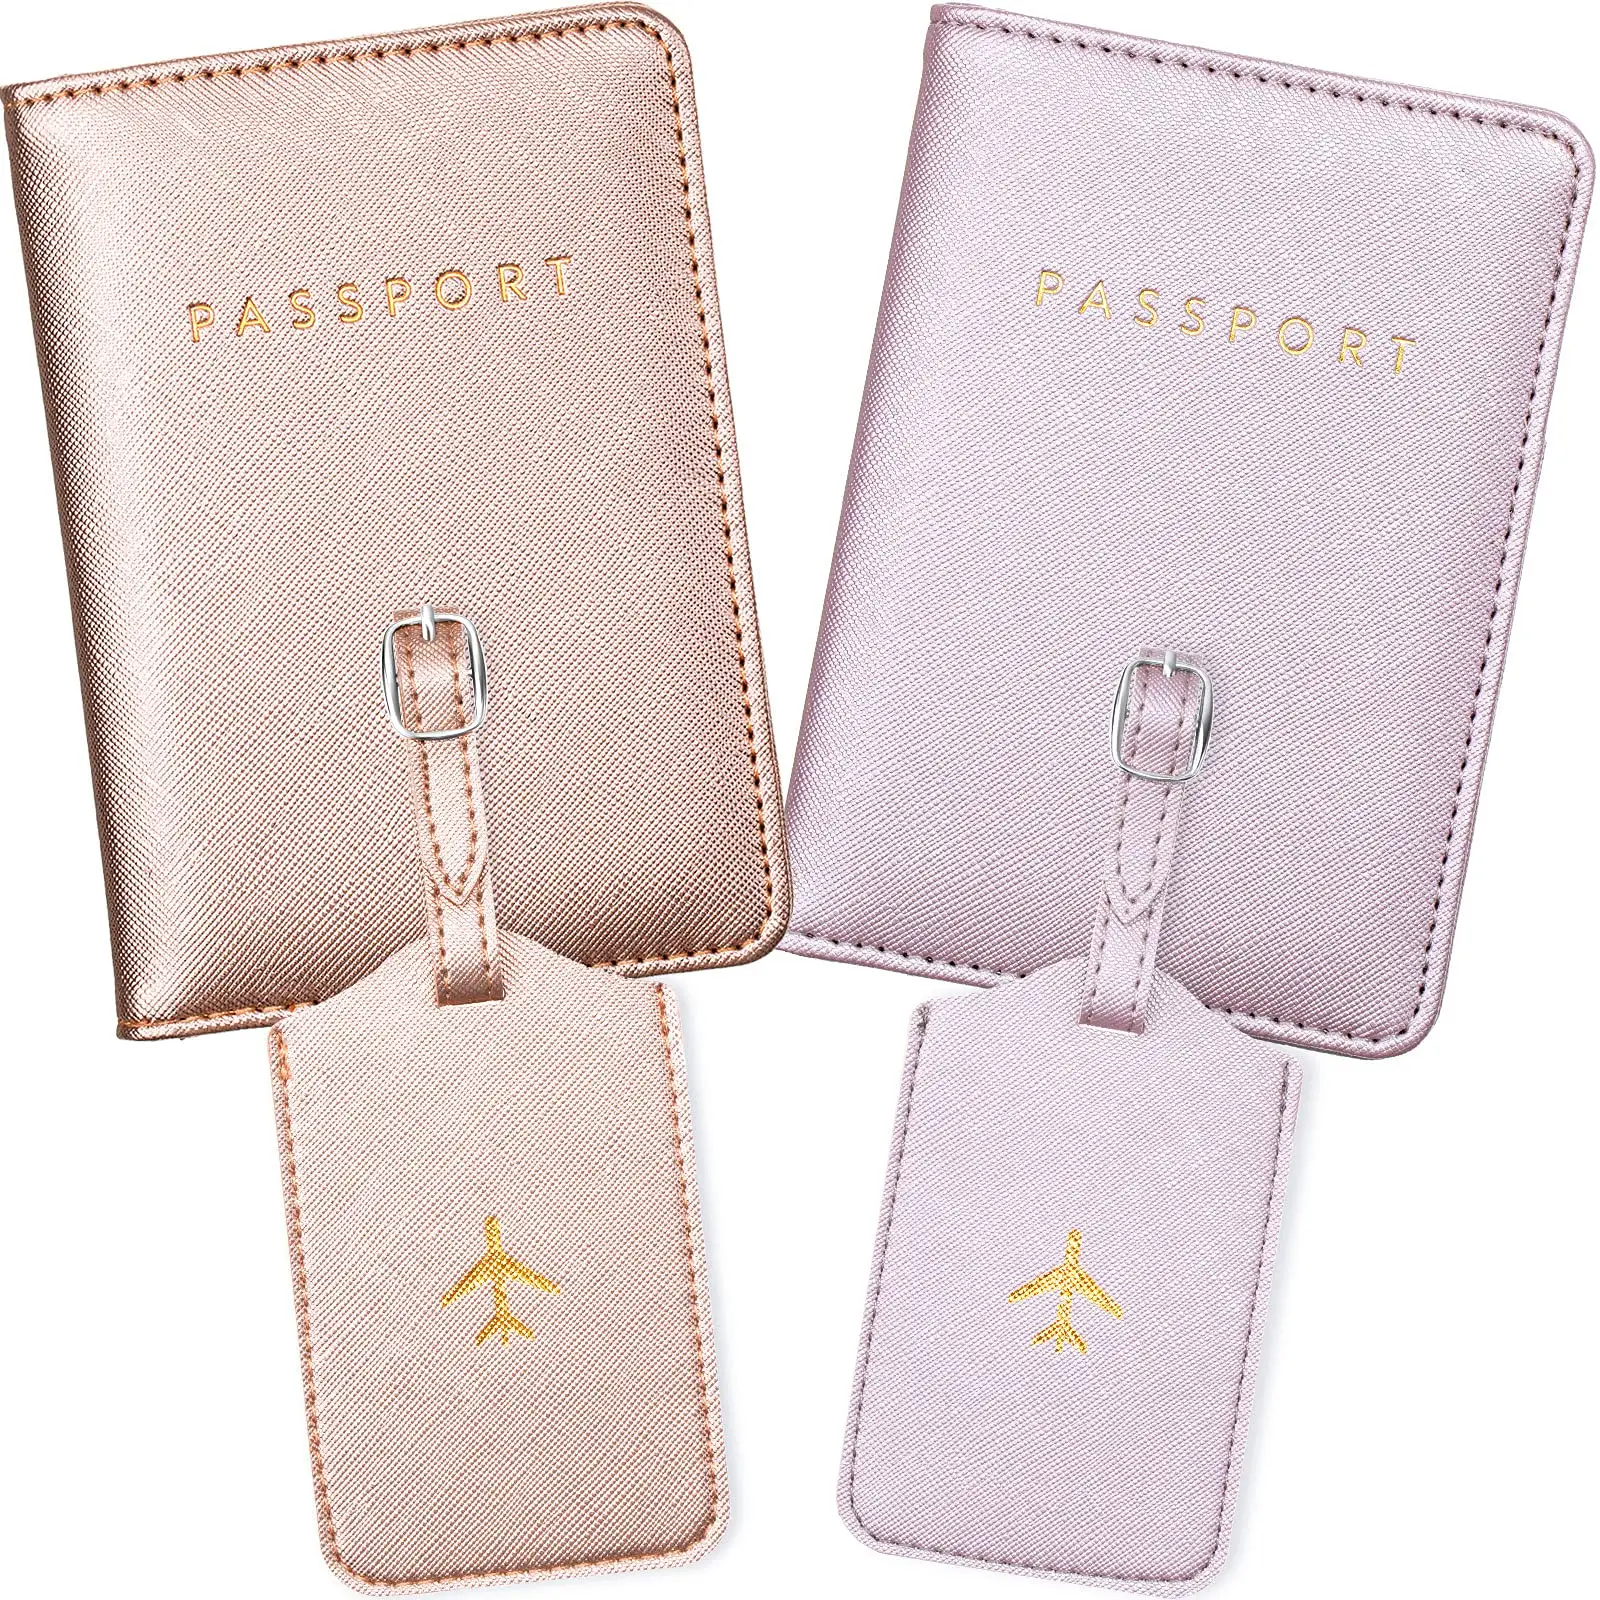 Dompet Folder paspor perjalanan dengan Logo asli tempat penutup paspor kulit asli